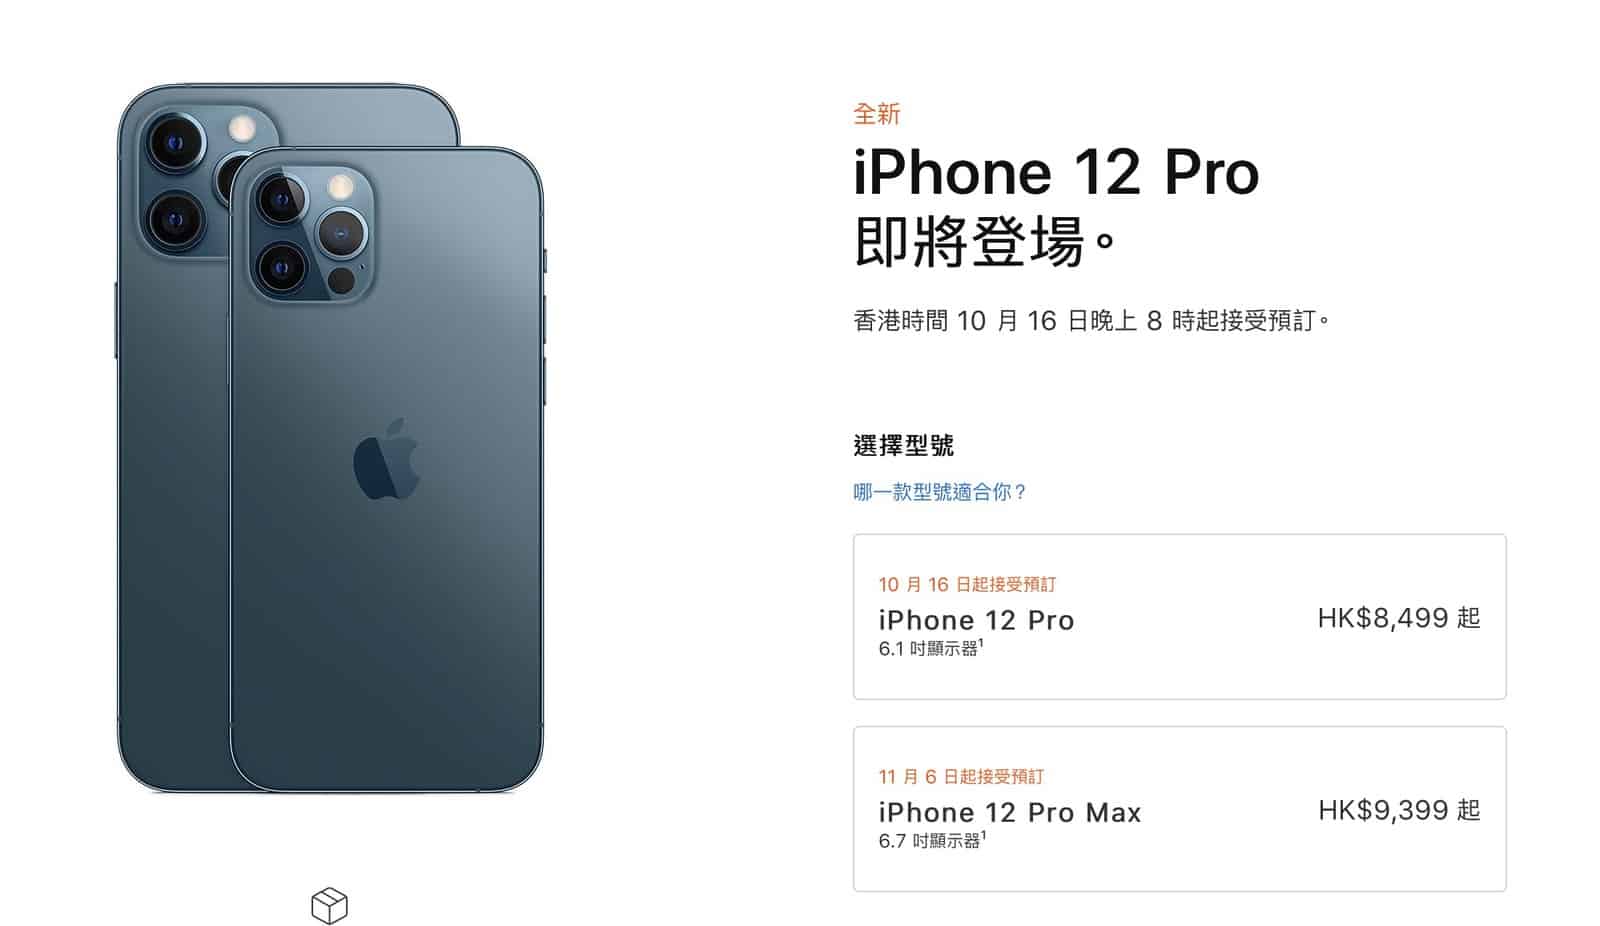 iPhone 12 Pro / Pro Max 功能規格、香港價錢、顏色、預訂及發售日期+ 